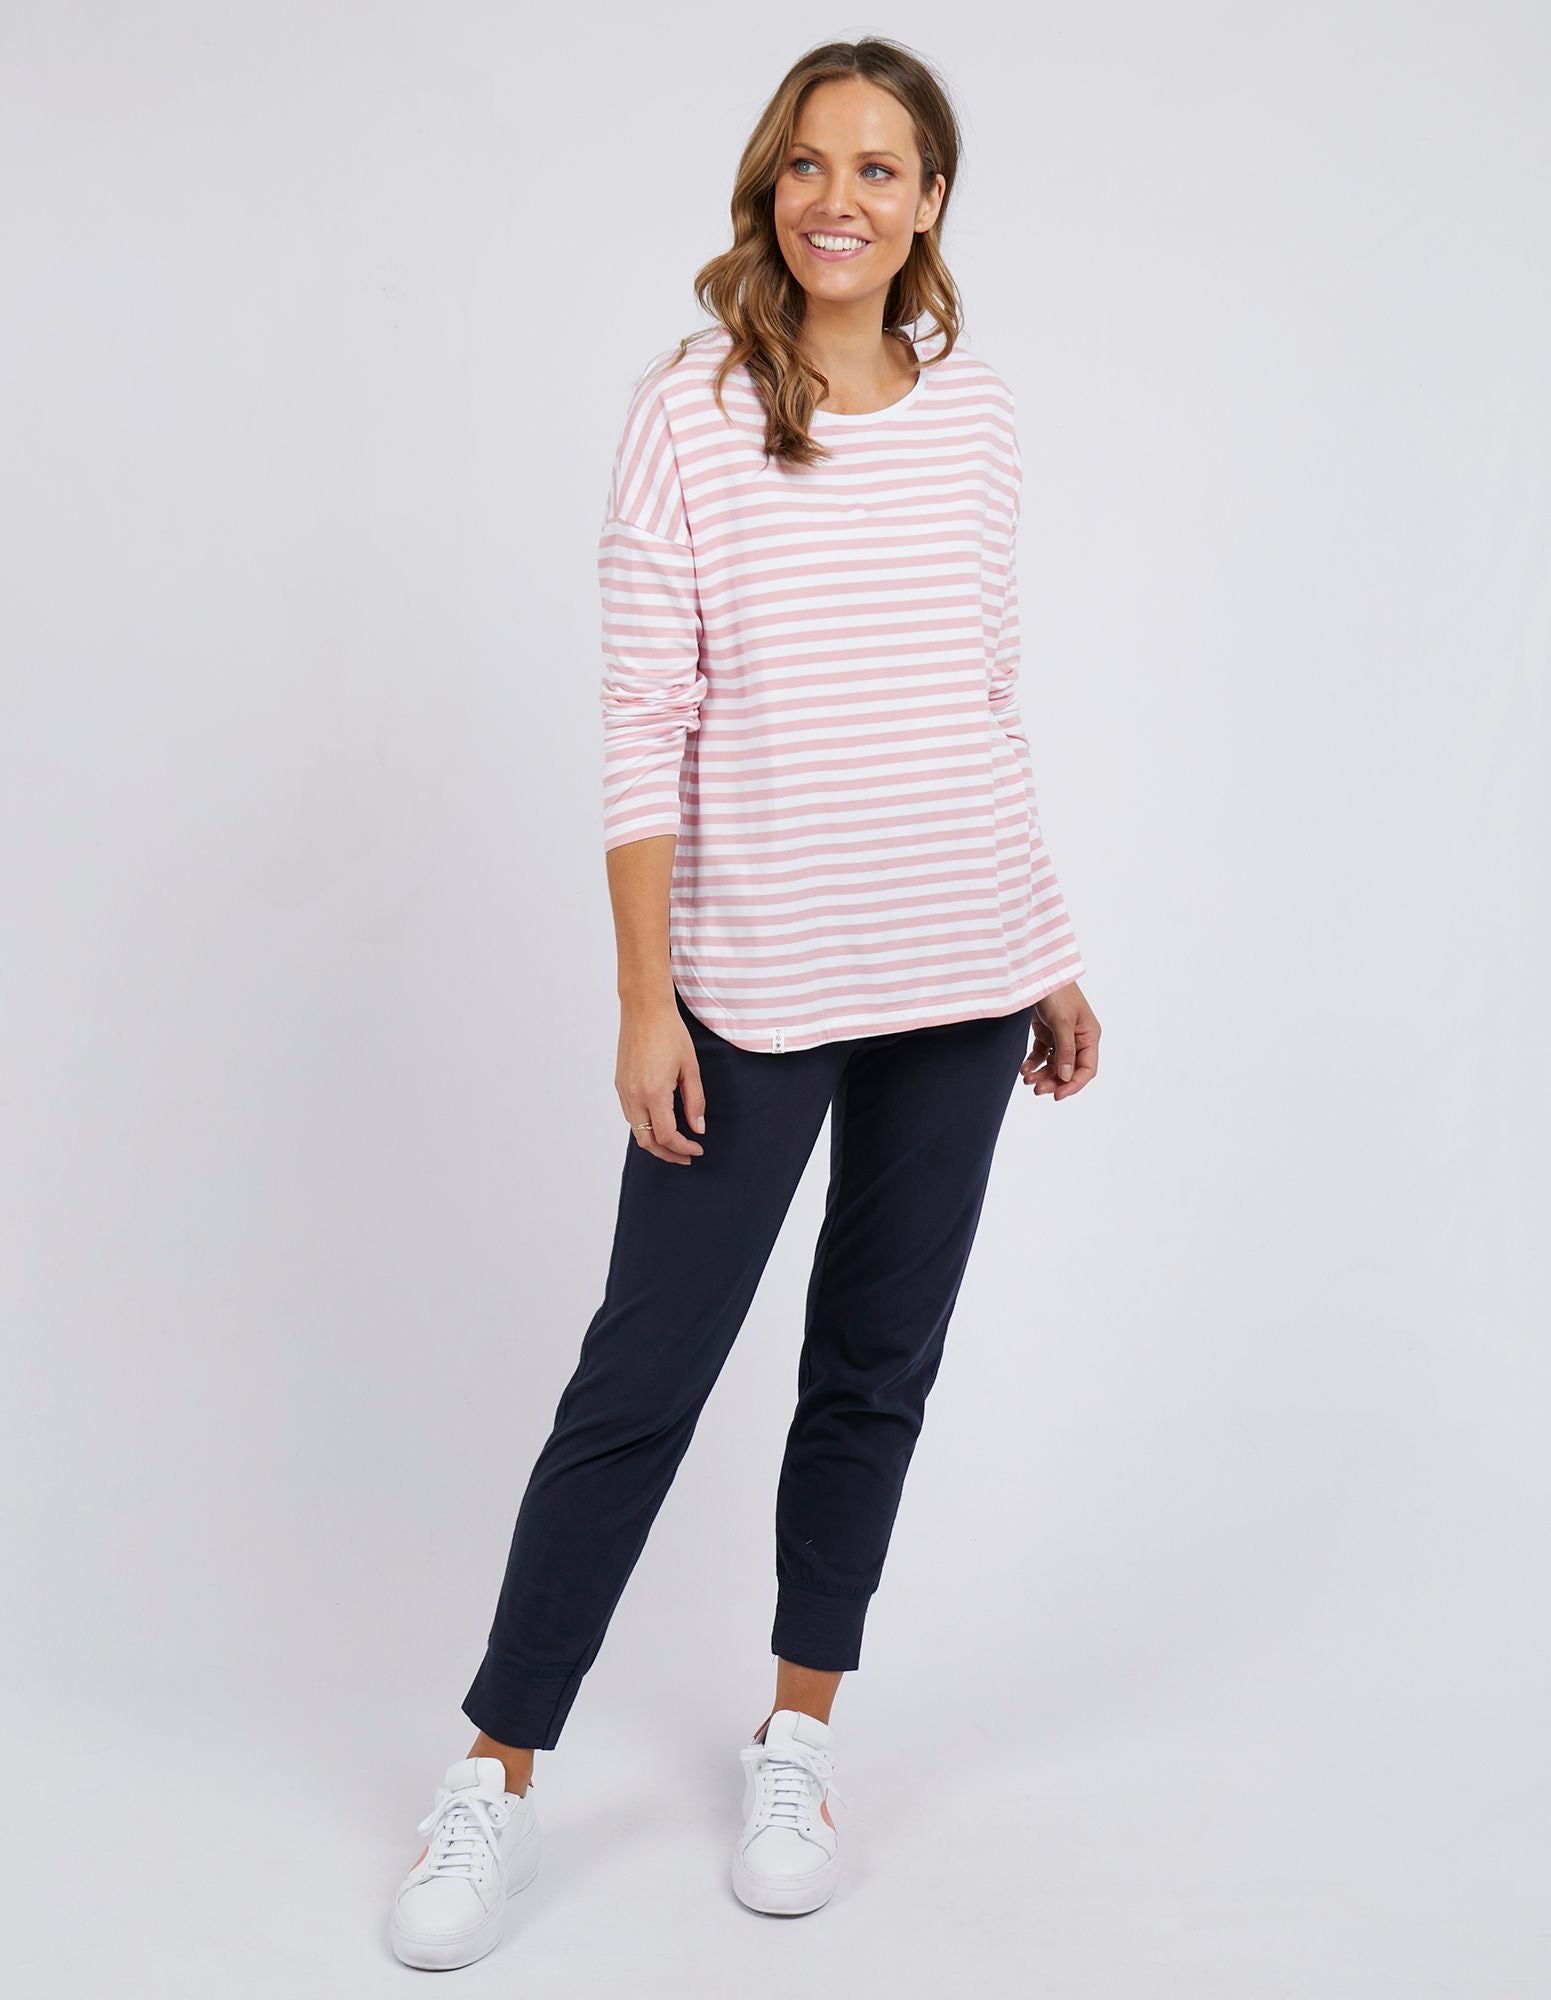 Lauren L/S Tee - White & Coral Blush Stripe - Elm Lifestyle - FUDGE Gifts Home Lifestyle